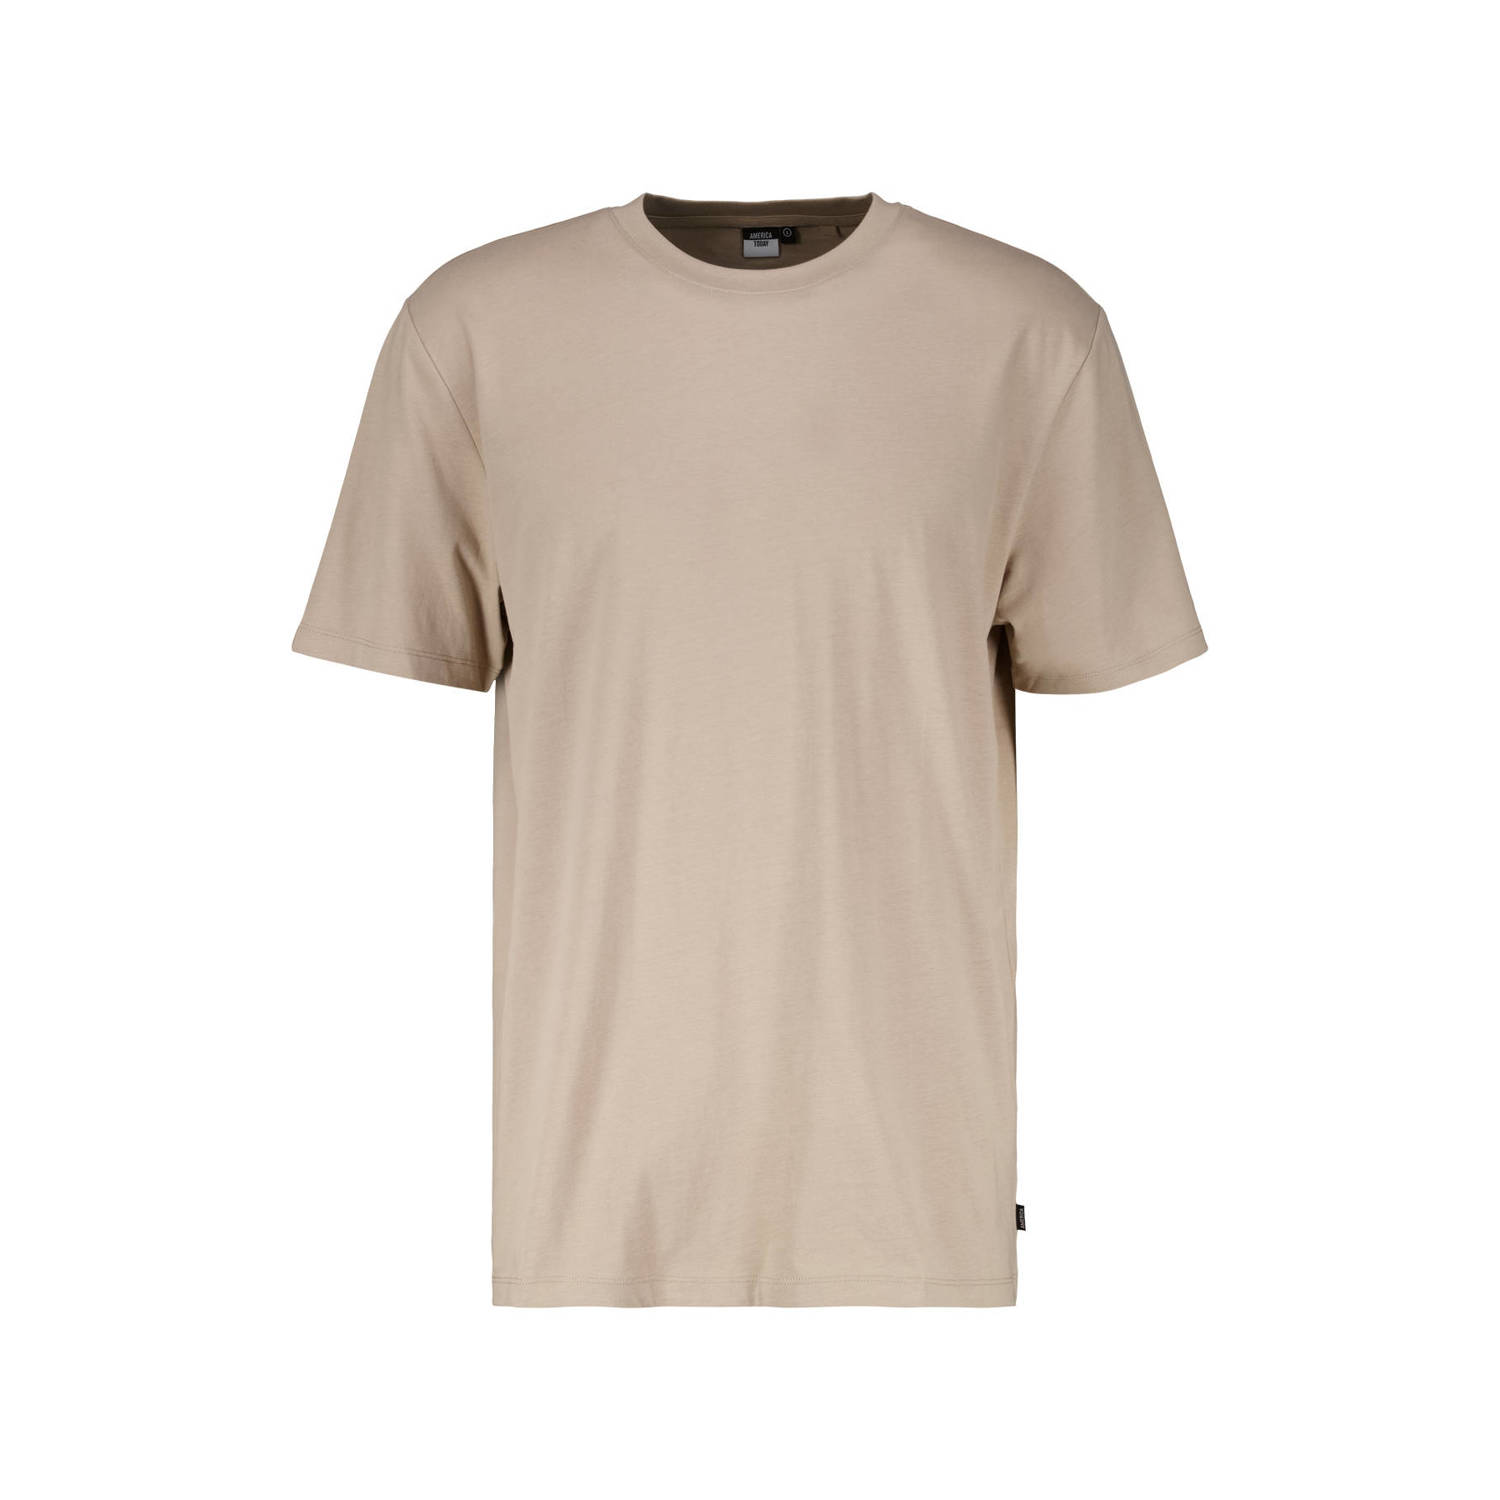 America Today oversized T-shirt Eric beige